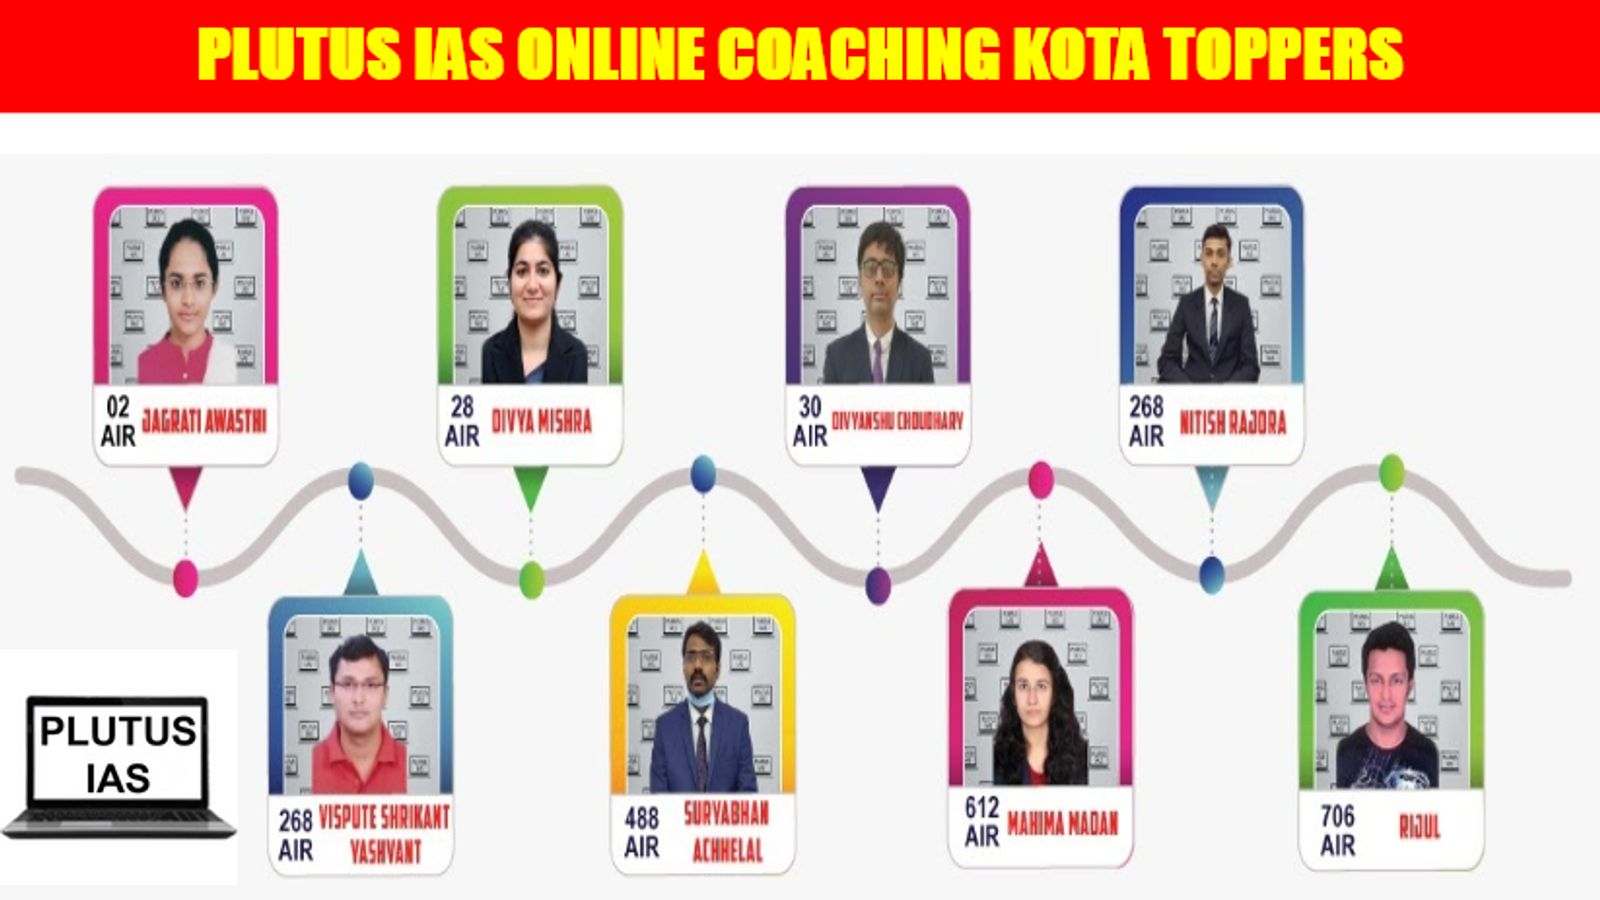 Plutus IAS Online Coaching Kota Toppers